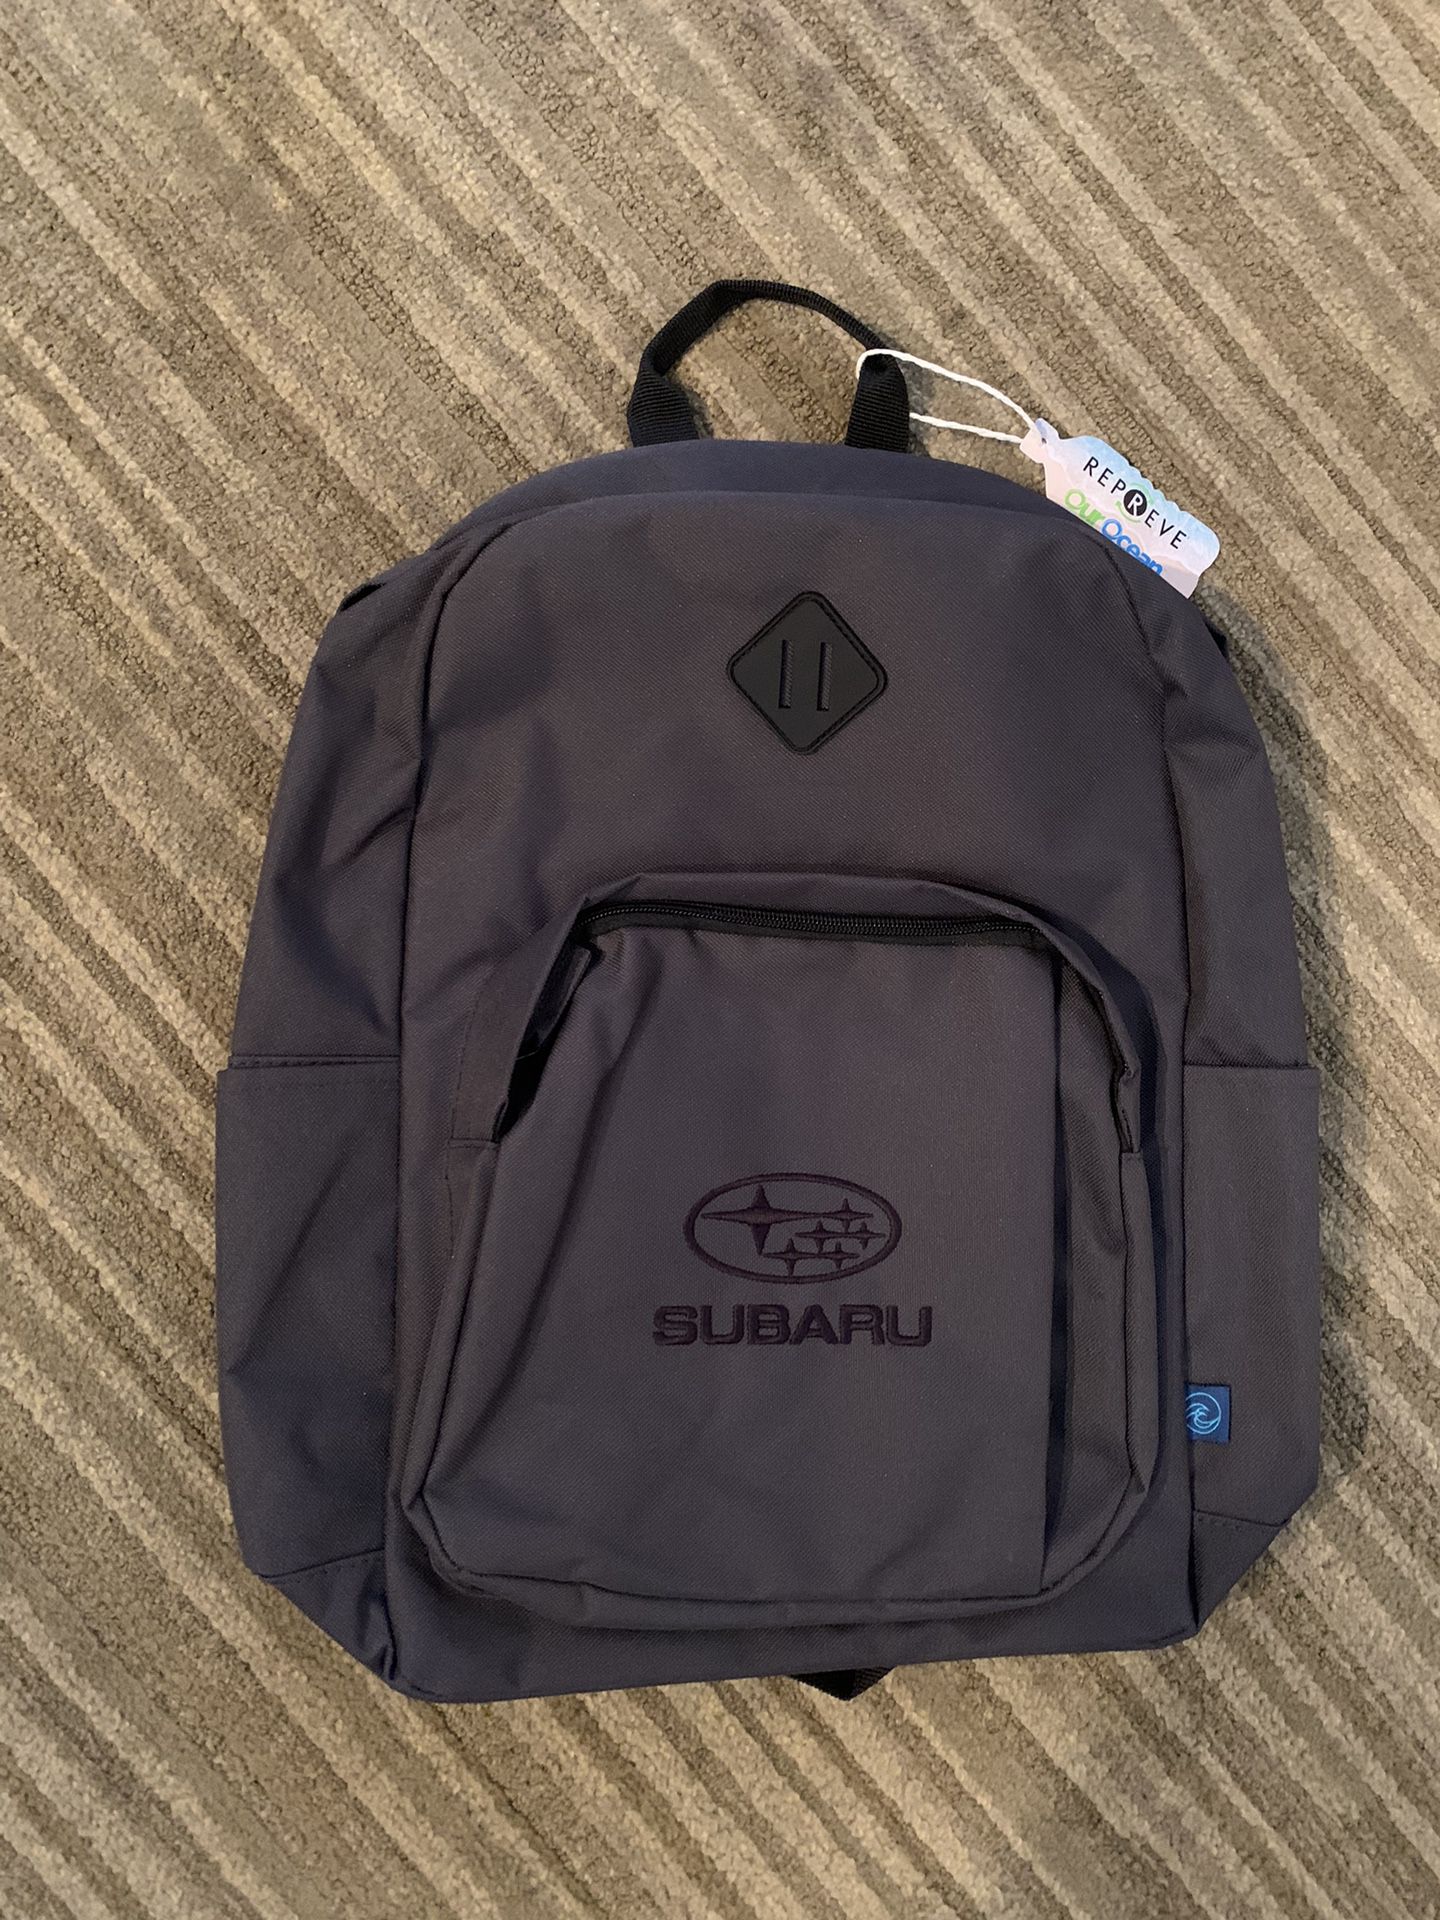 Subaru backpack 